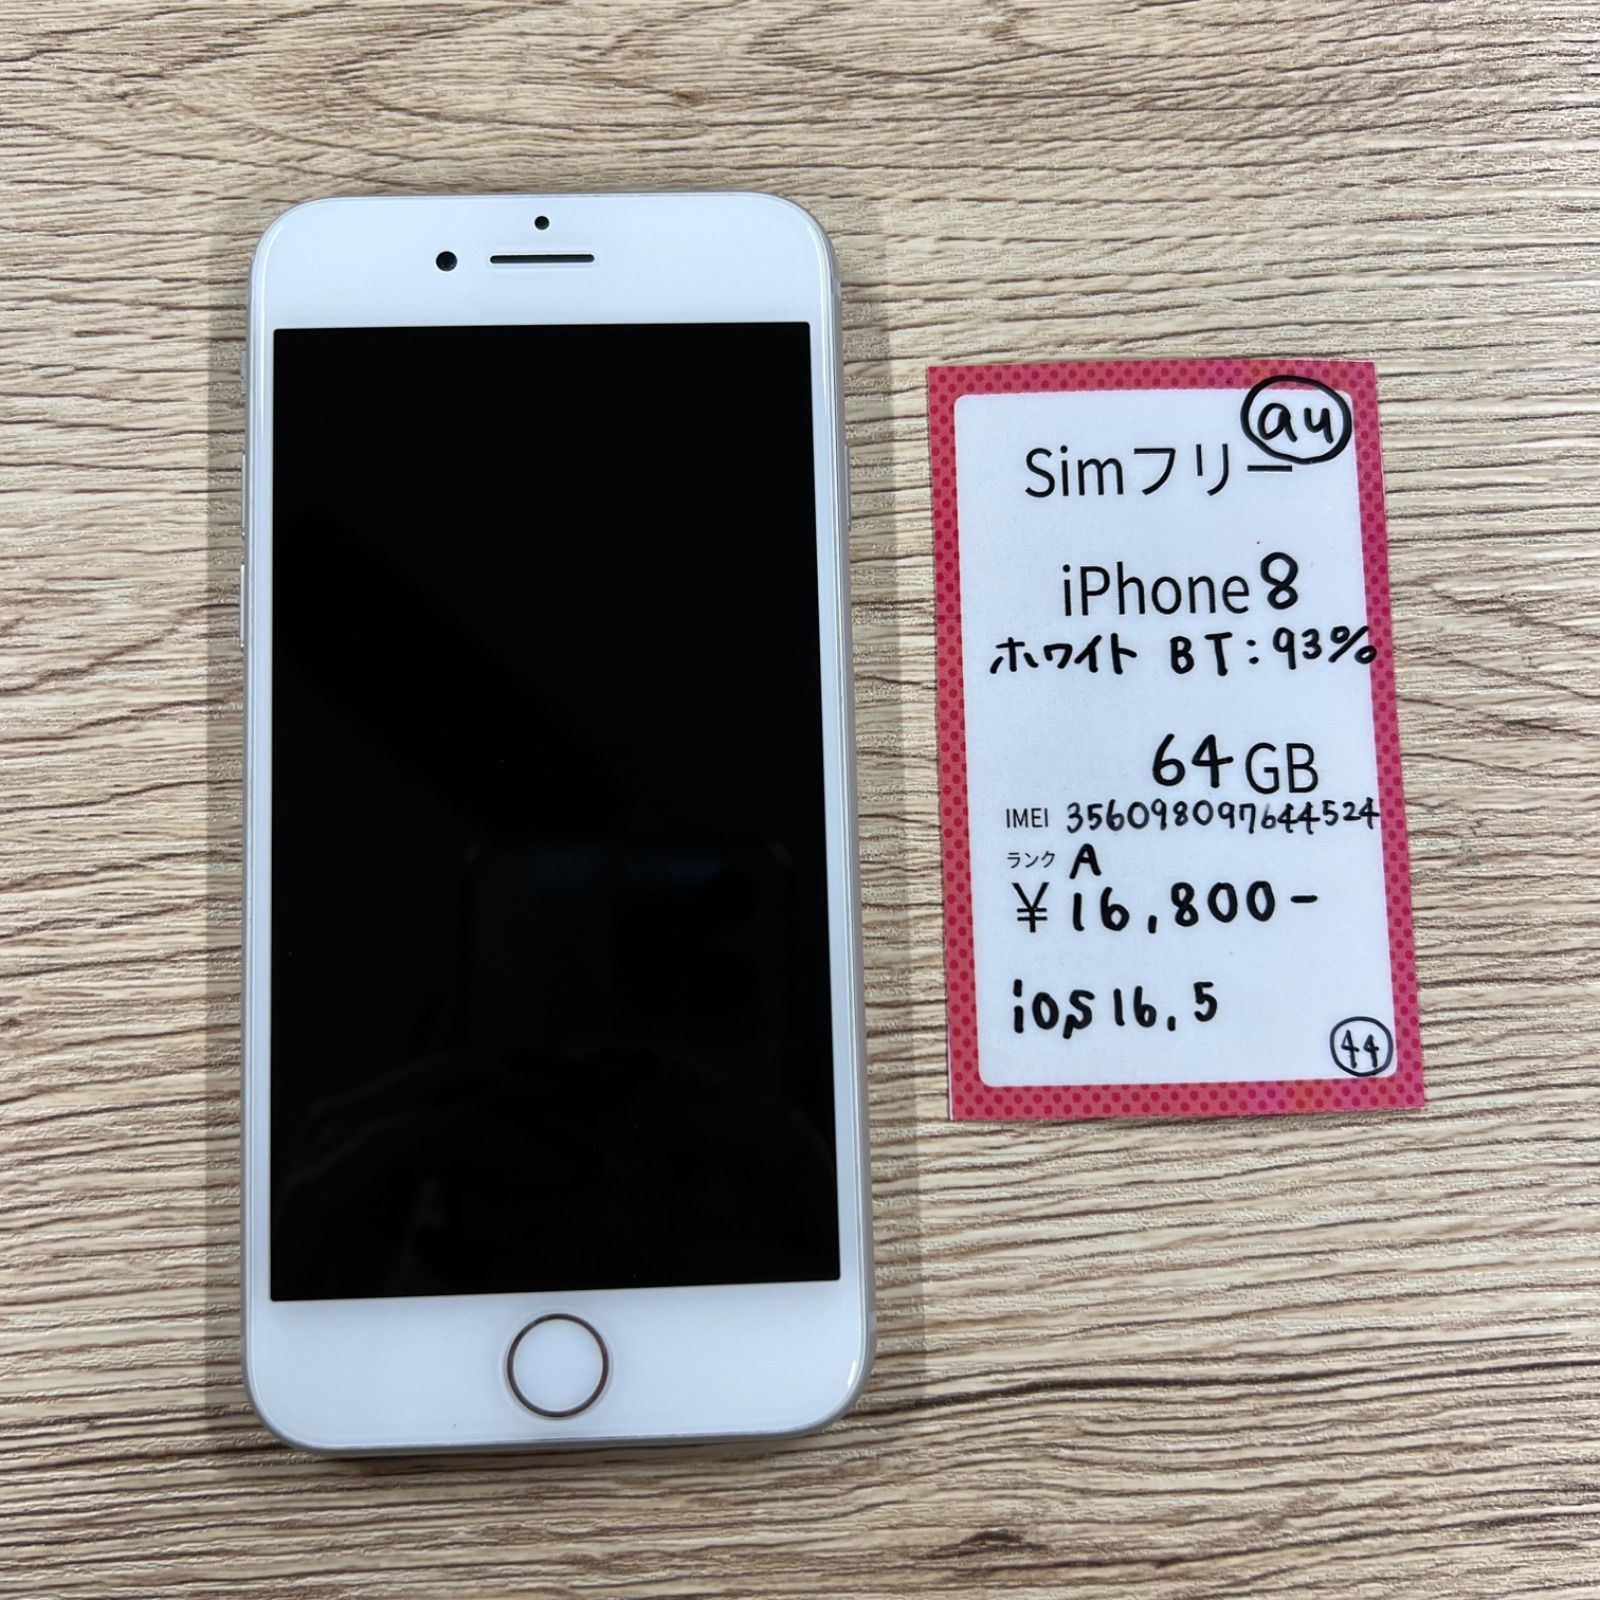 simフリー iPhone 8 ホワイト64 GB 本体